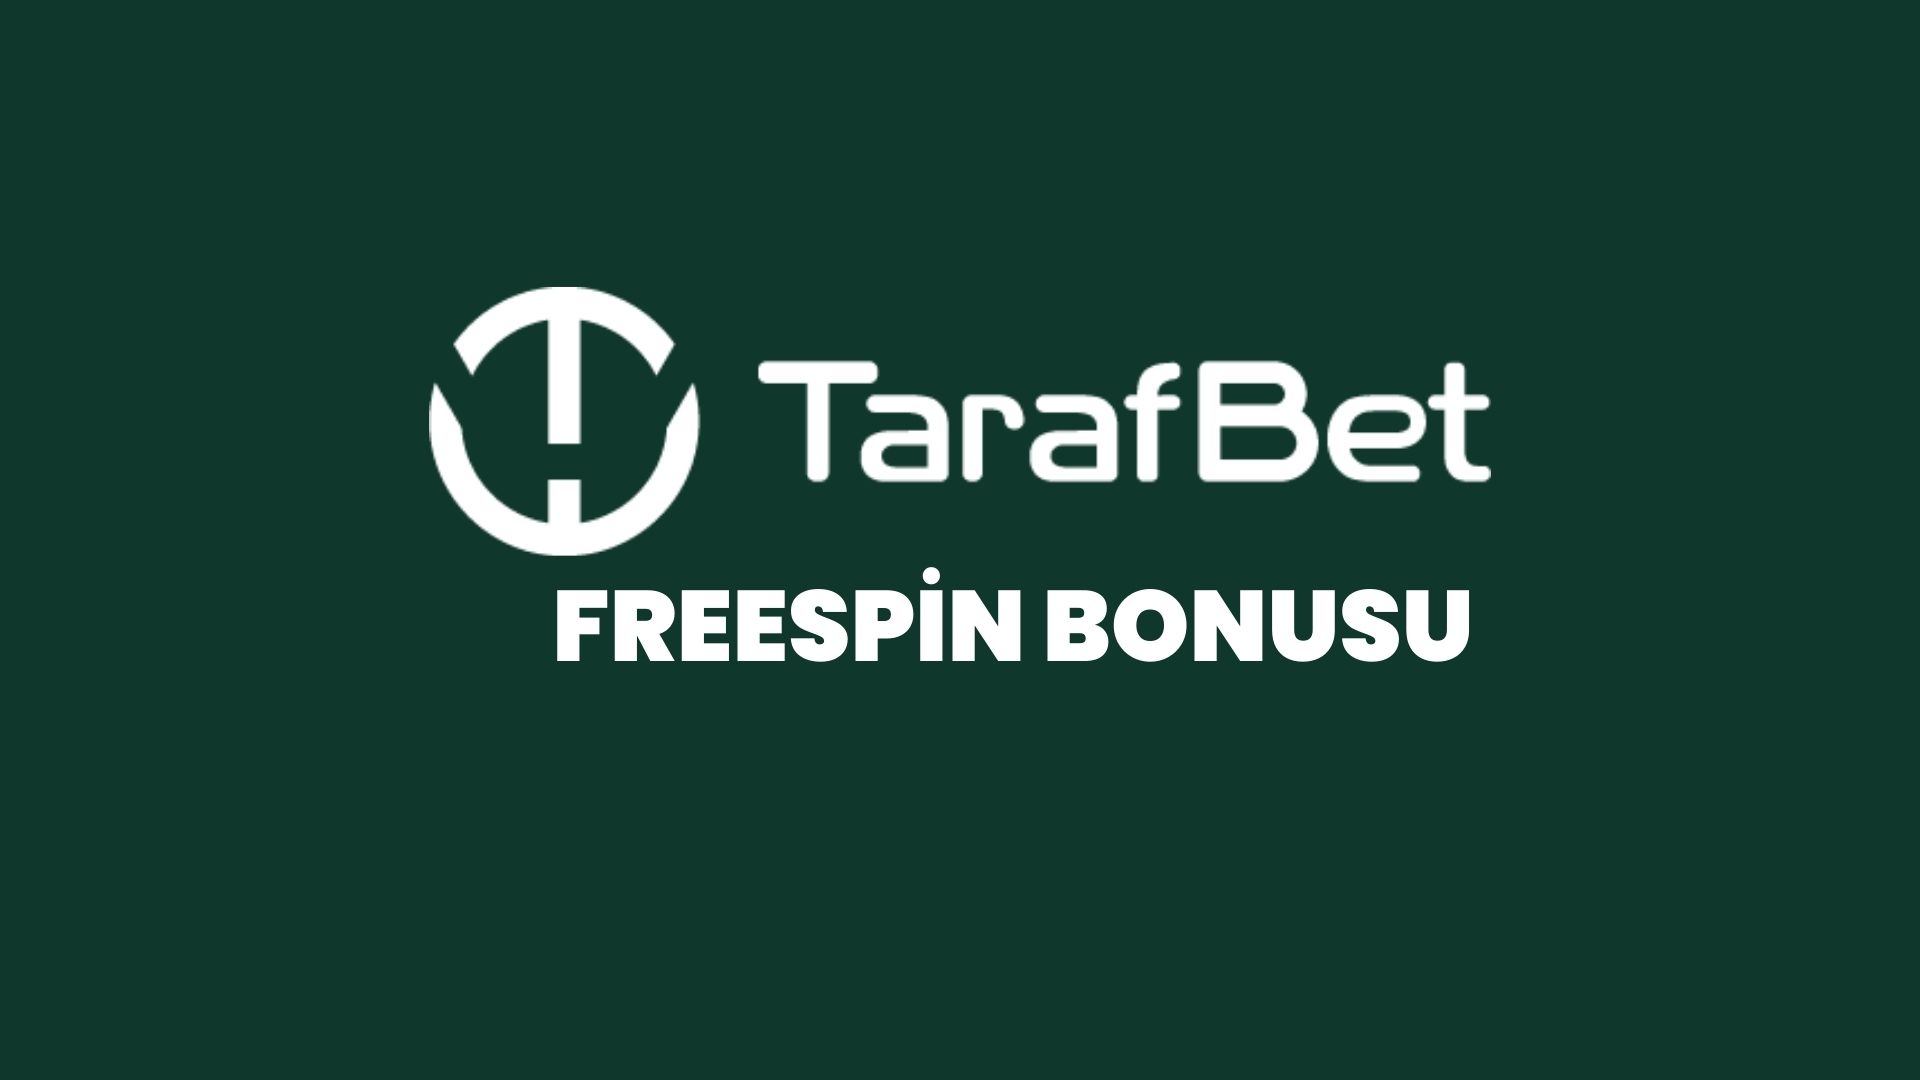 tarafbet-freespin-bonusu